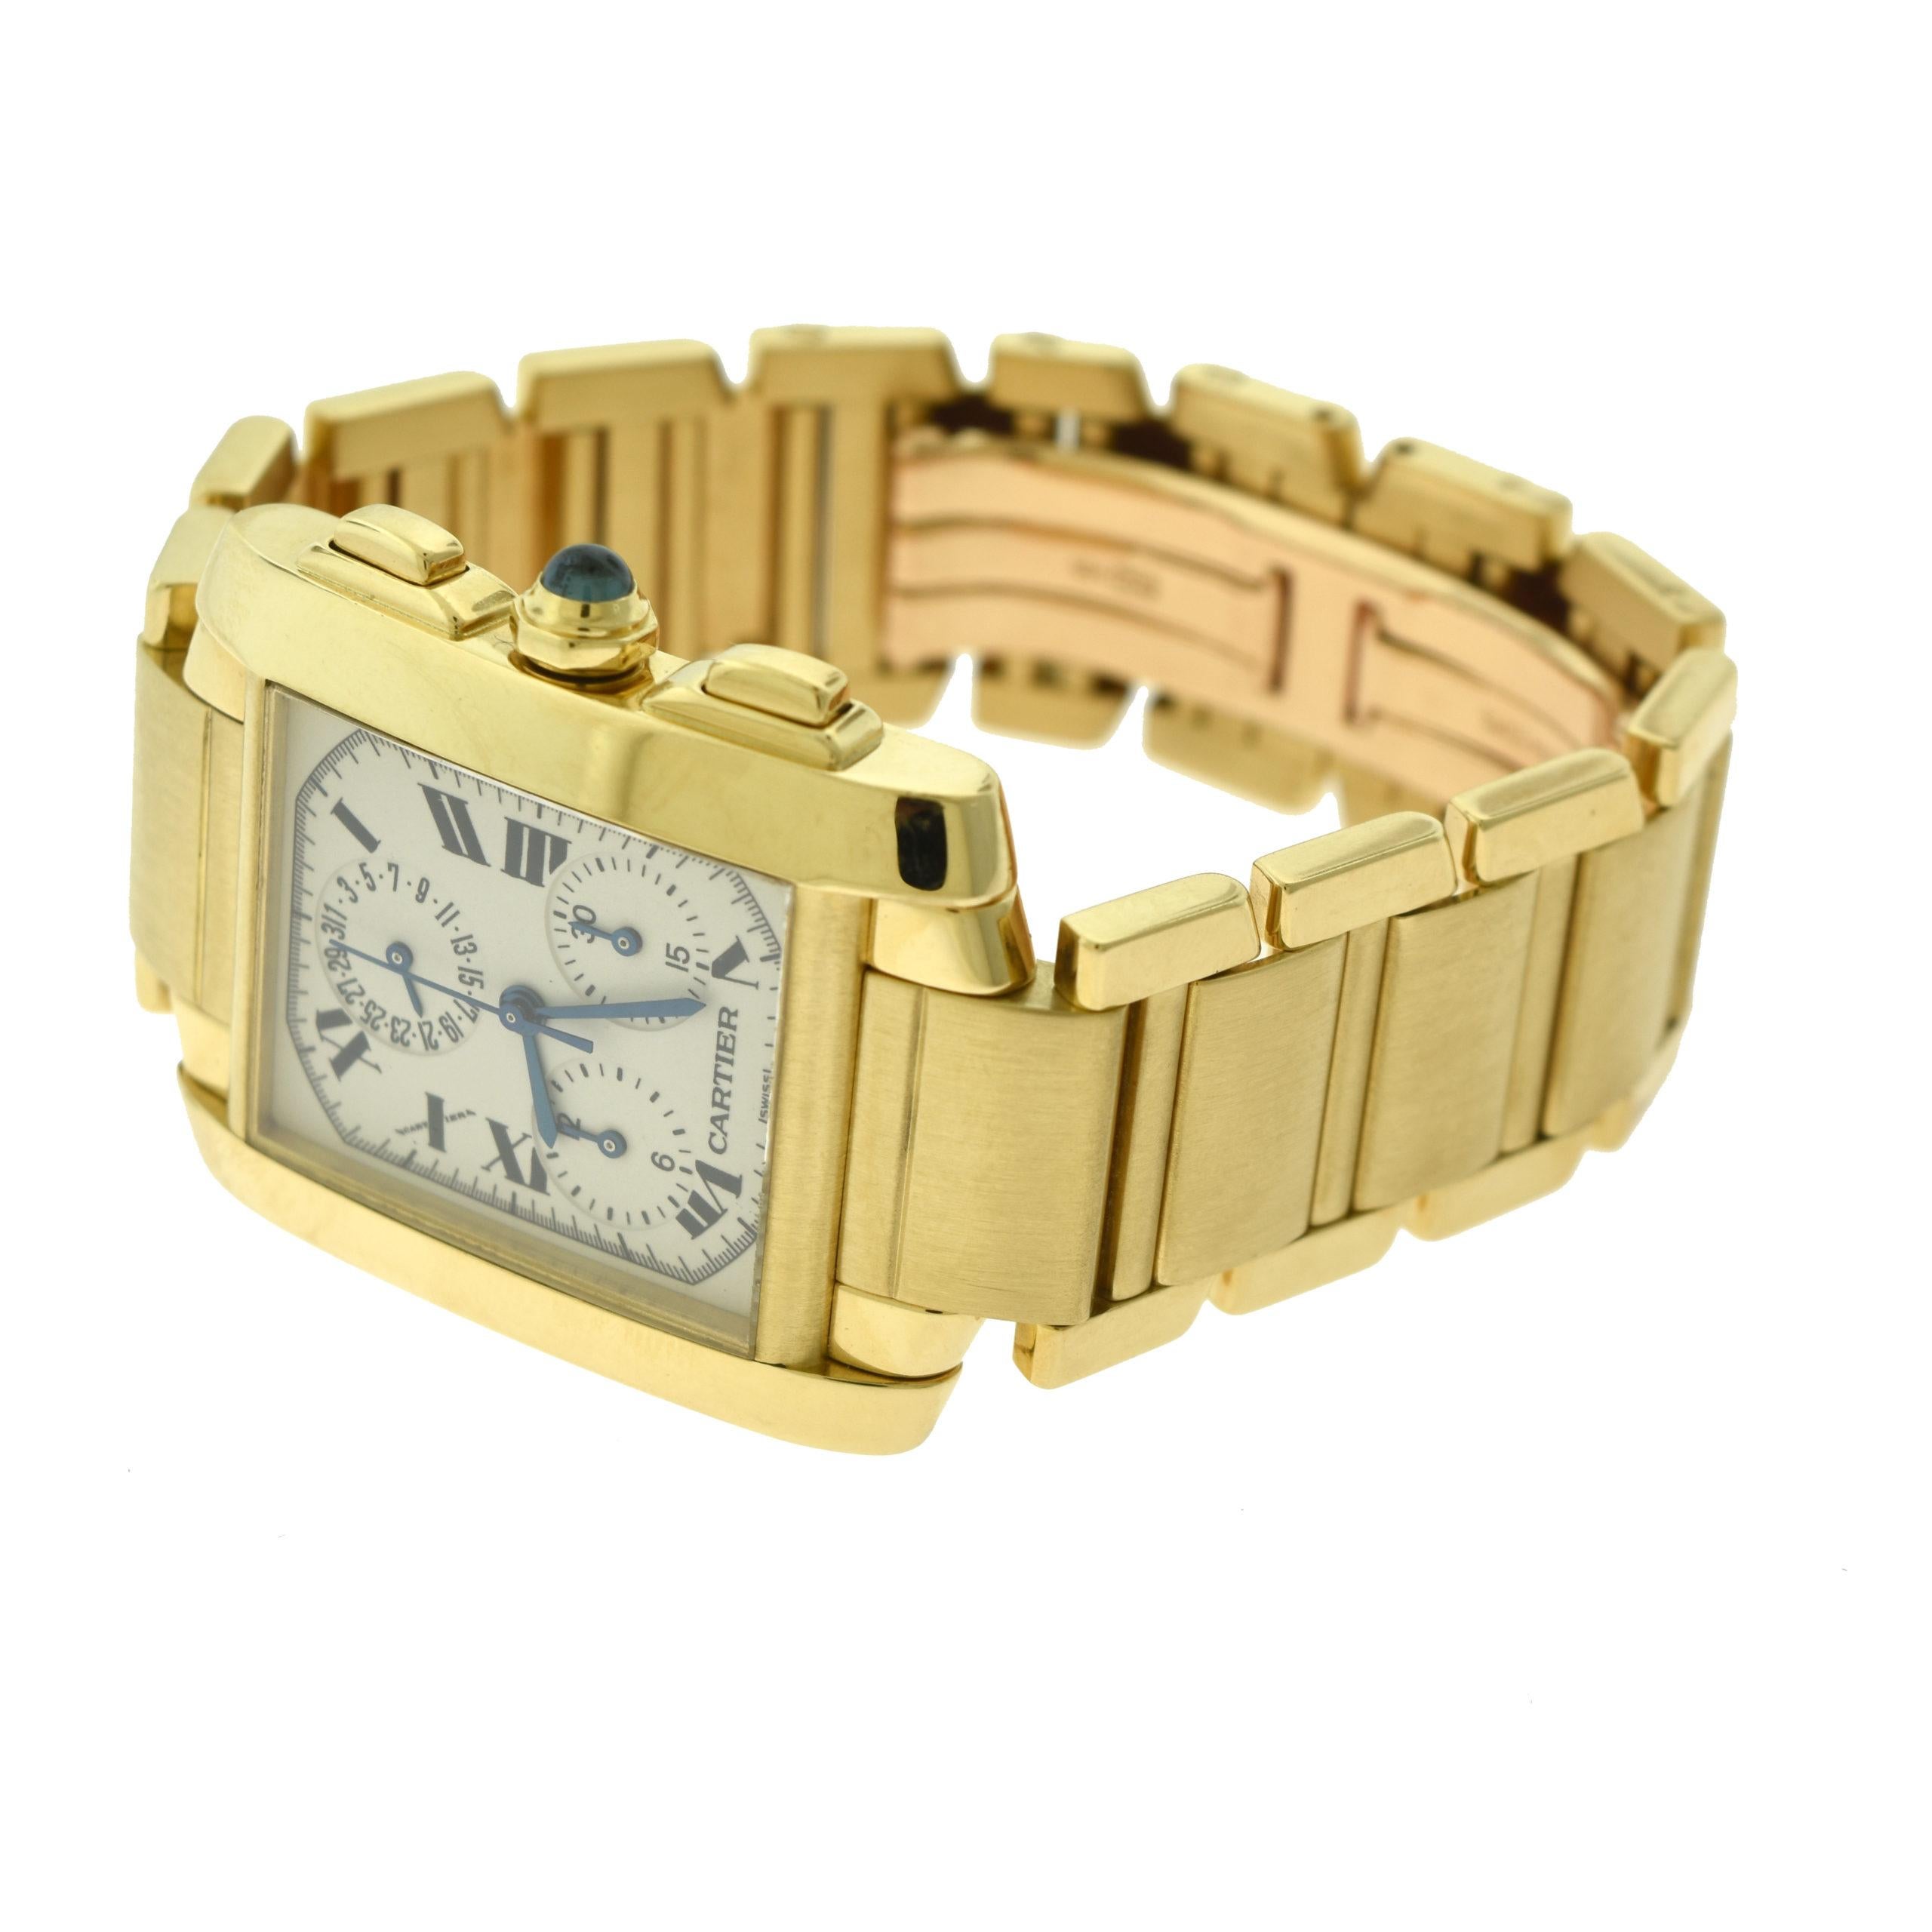 Cartier Tank Francaise Ref. 1830 Chronograph White Dial 18 Karat Gold Watch 1